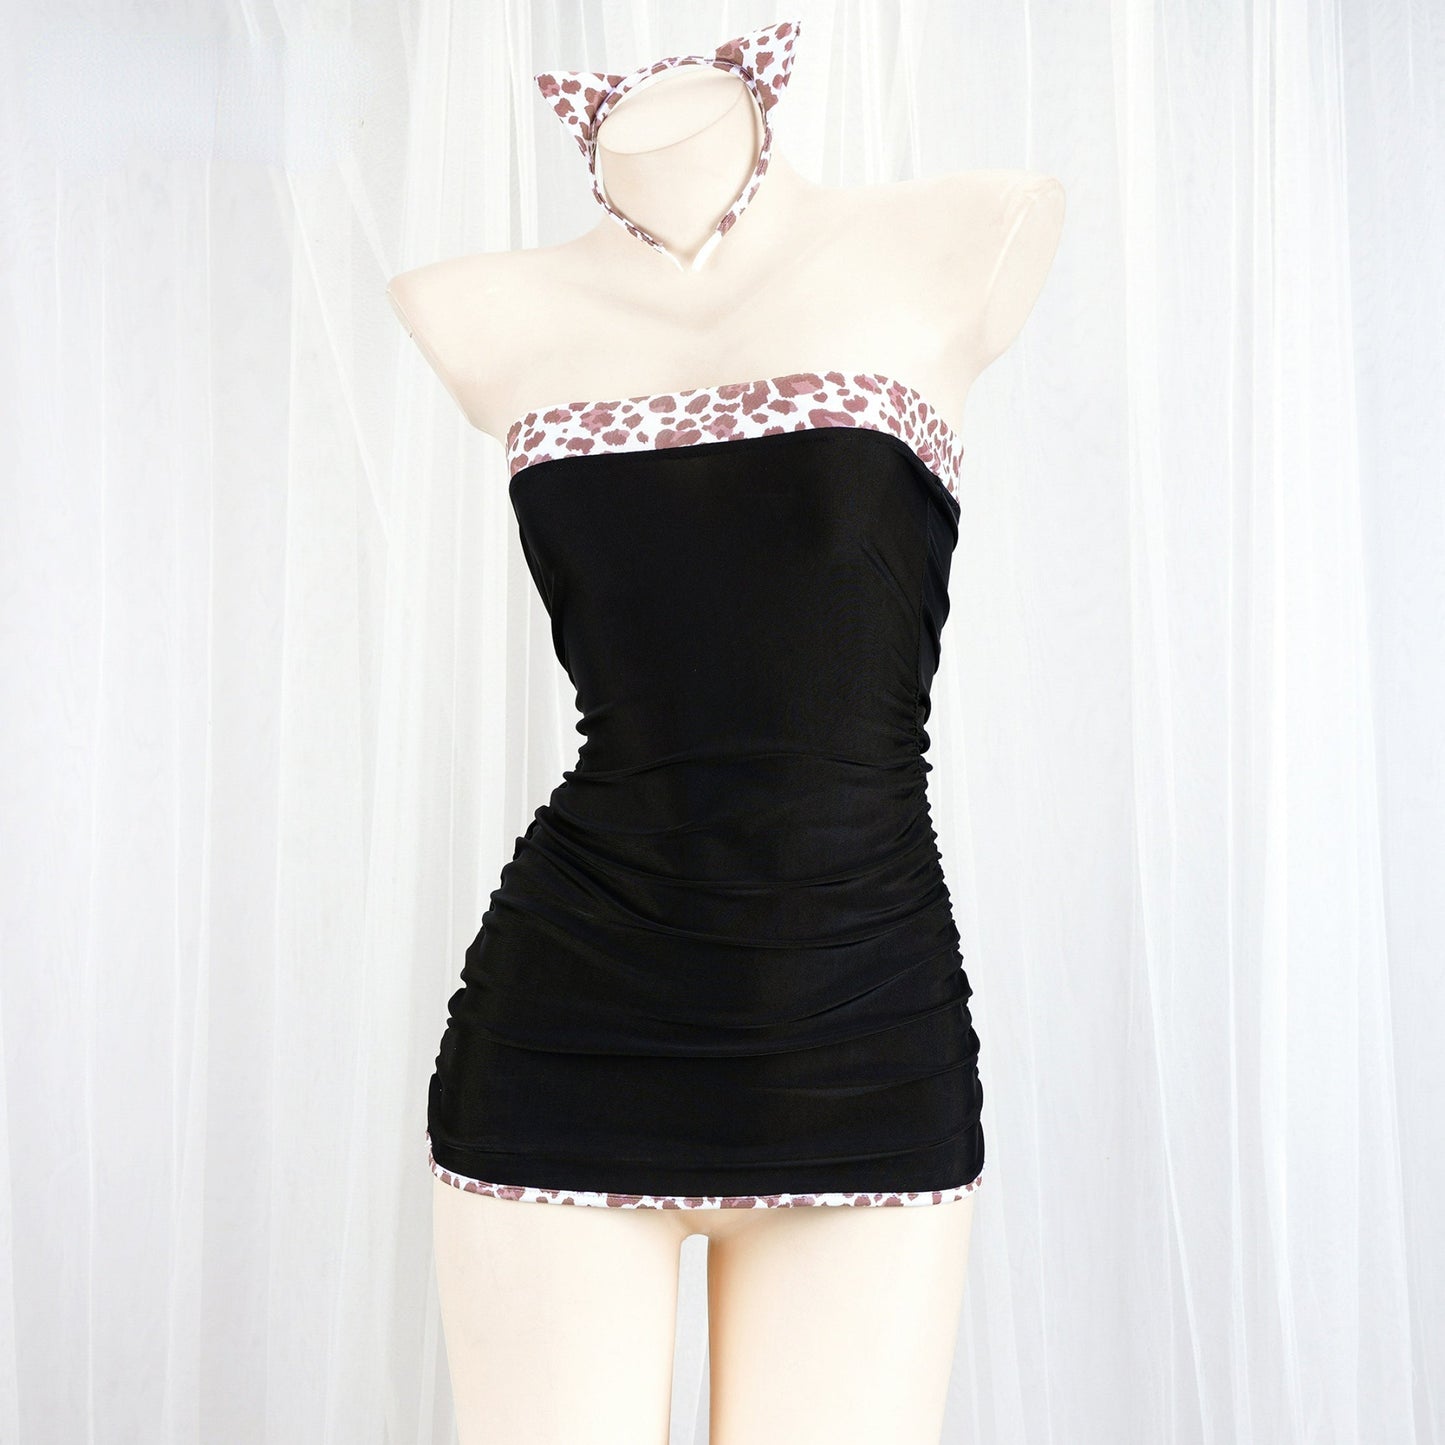 Cute Slim Dress Black Animal Print Style ON484 - Black / One